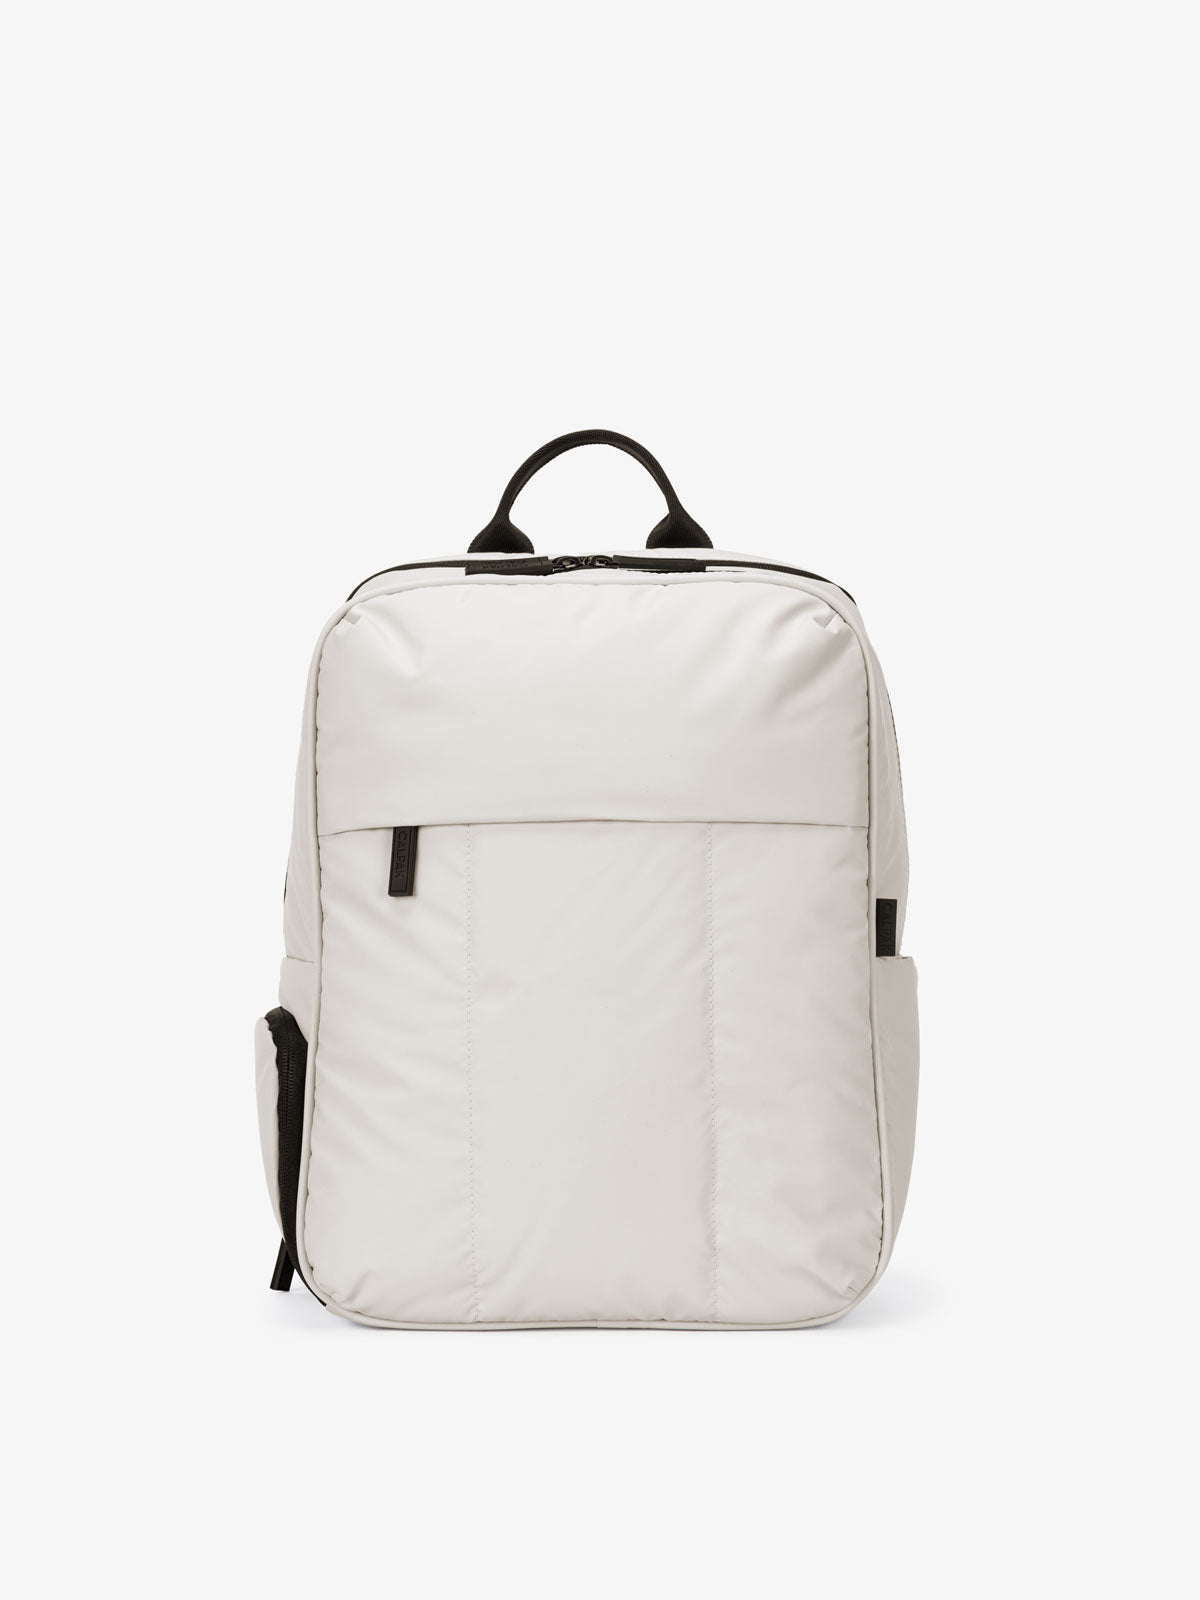 Luka Laptop Backpack in Dove Grey